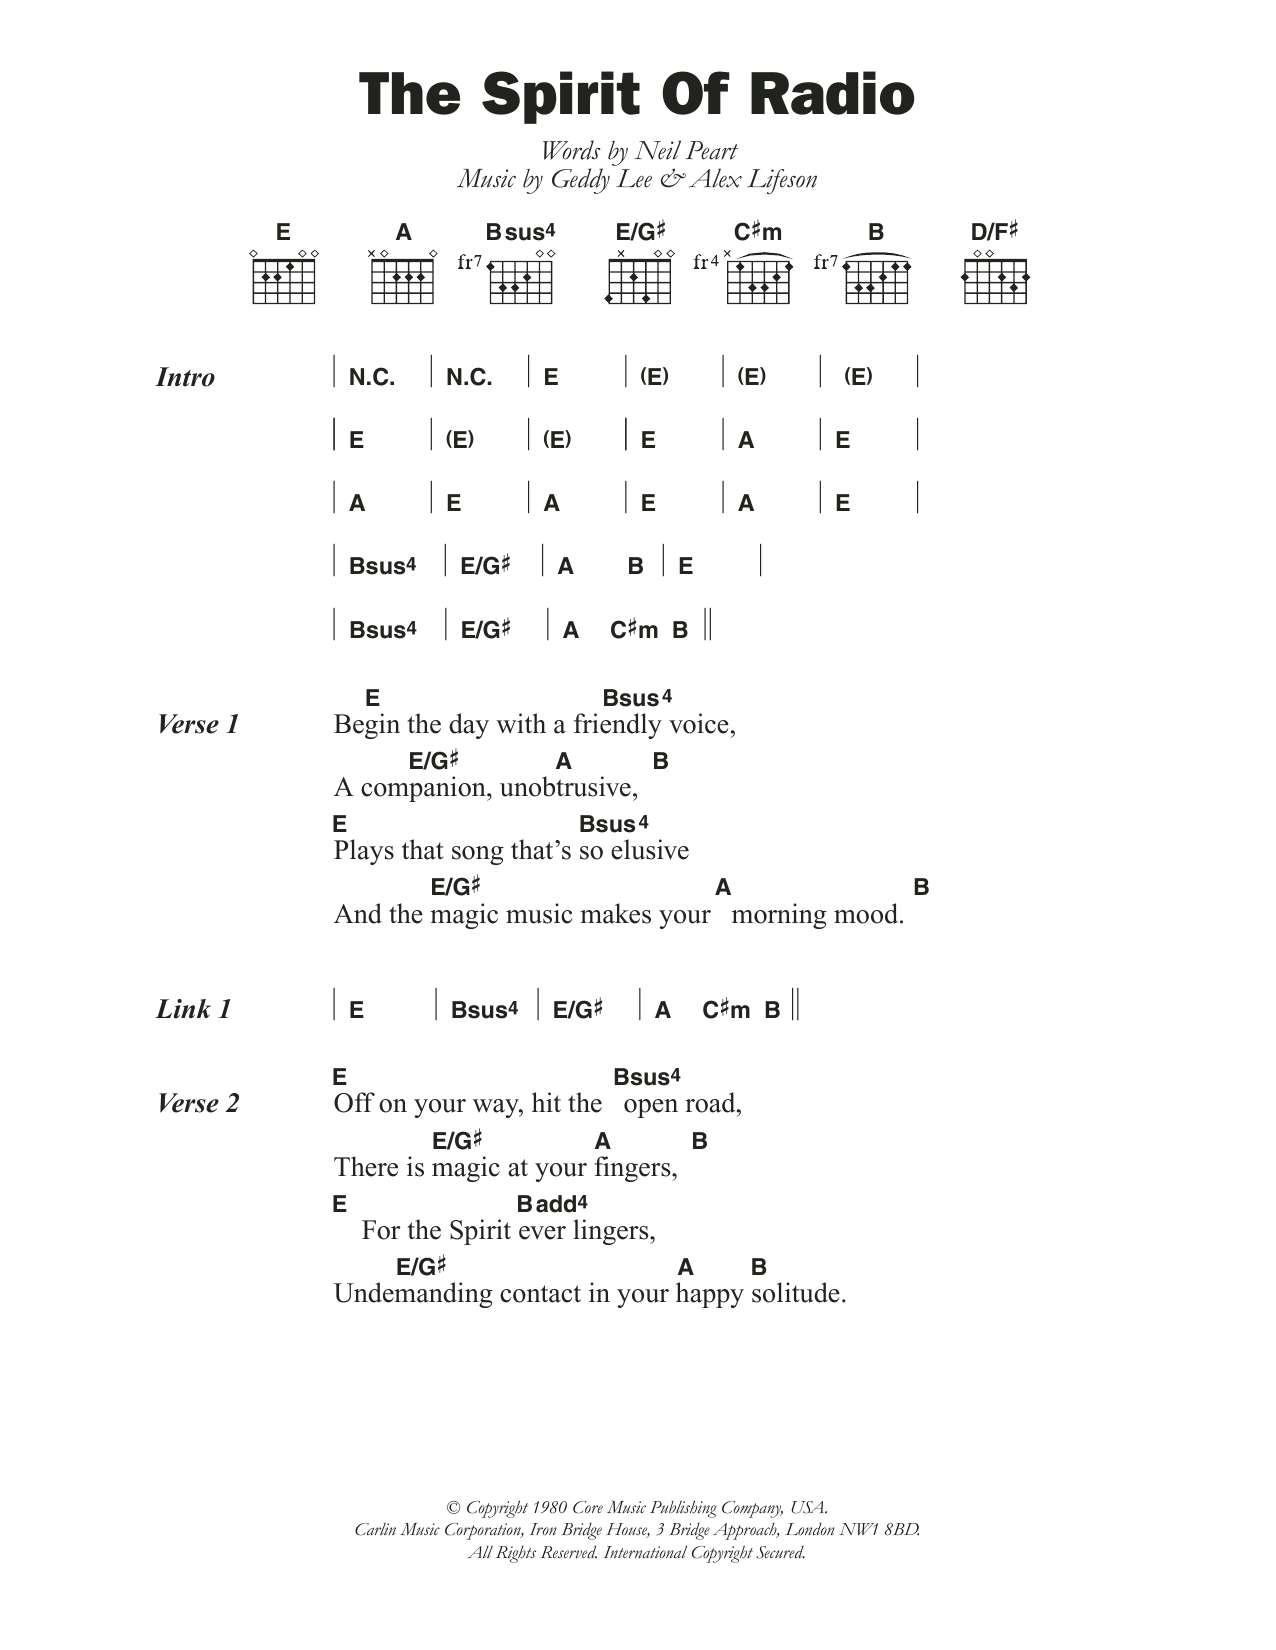 Rush The Spirit Of Radio Sheet Music Notes & Chords for Guitar Tab (Single Guitar) - Download or Print PDF